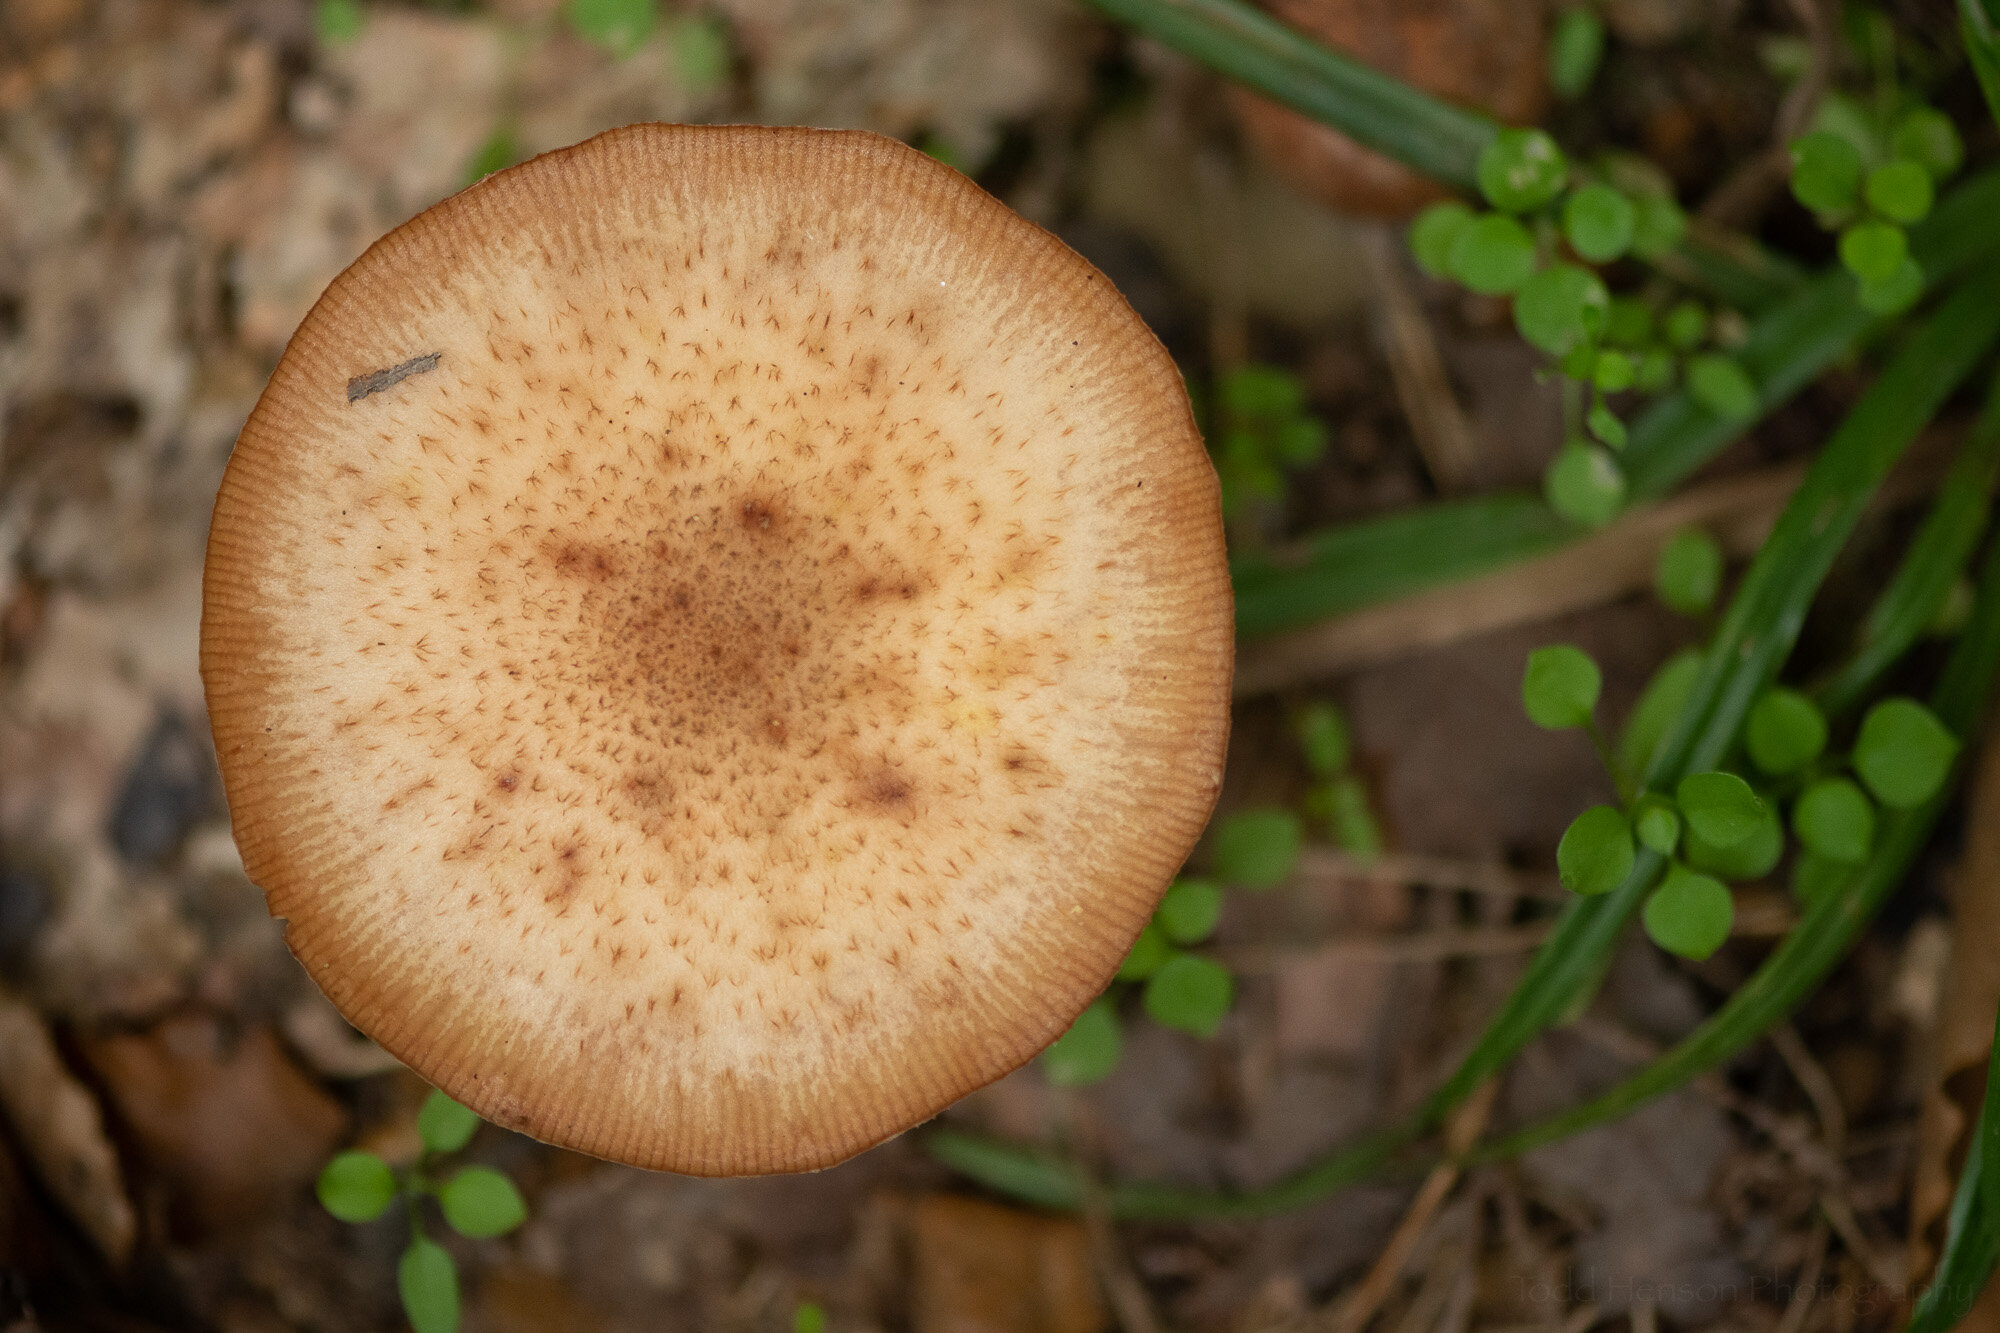 Top View of Mushroom